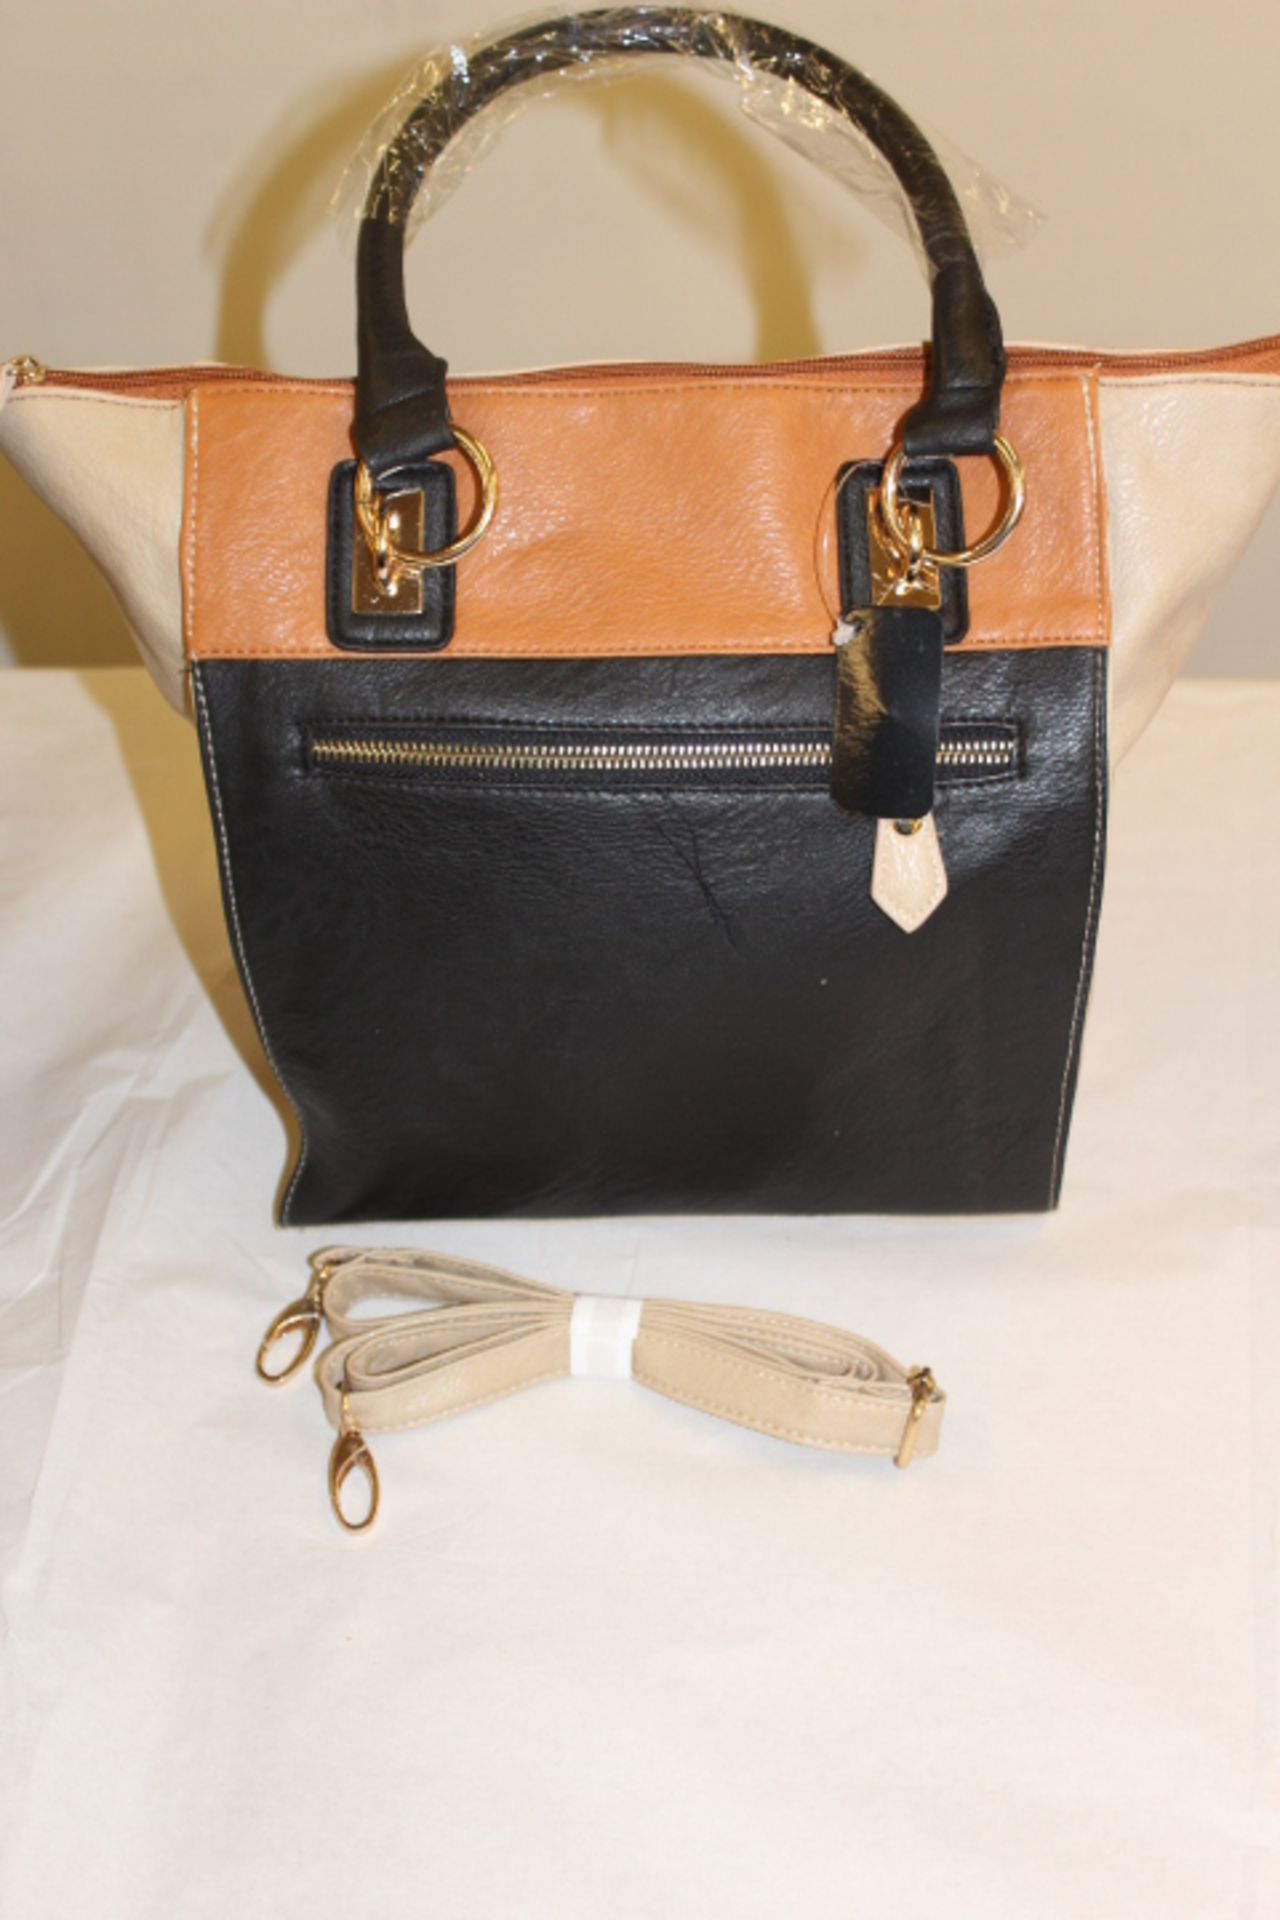 V Thomas Calvi Black & Tan Handbag - Image 2 of 2